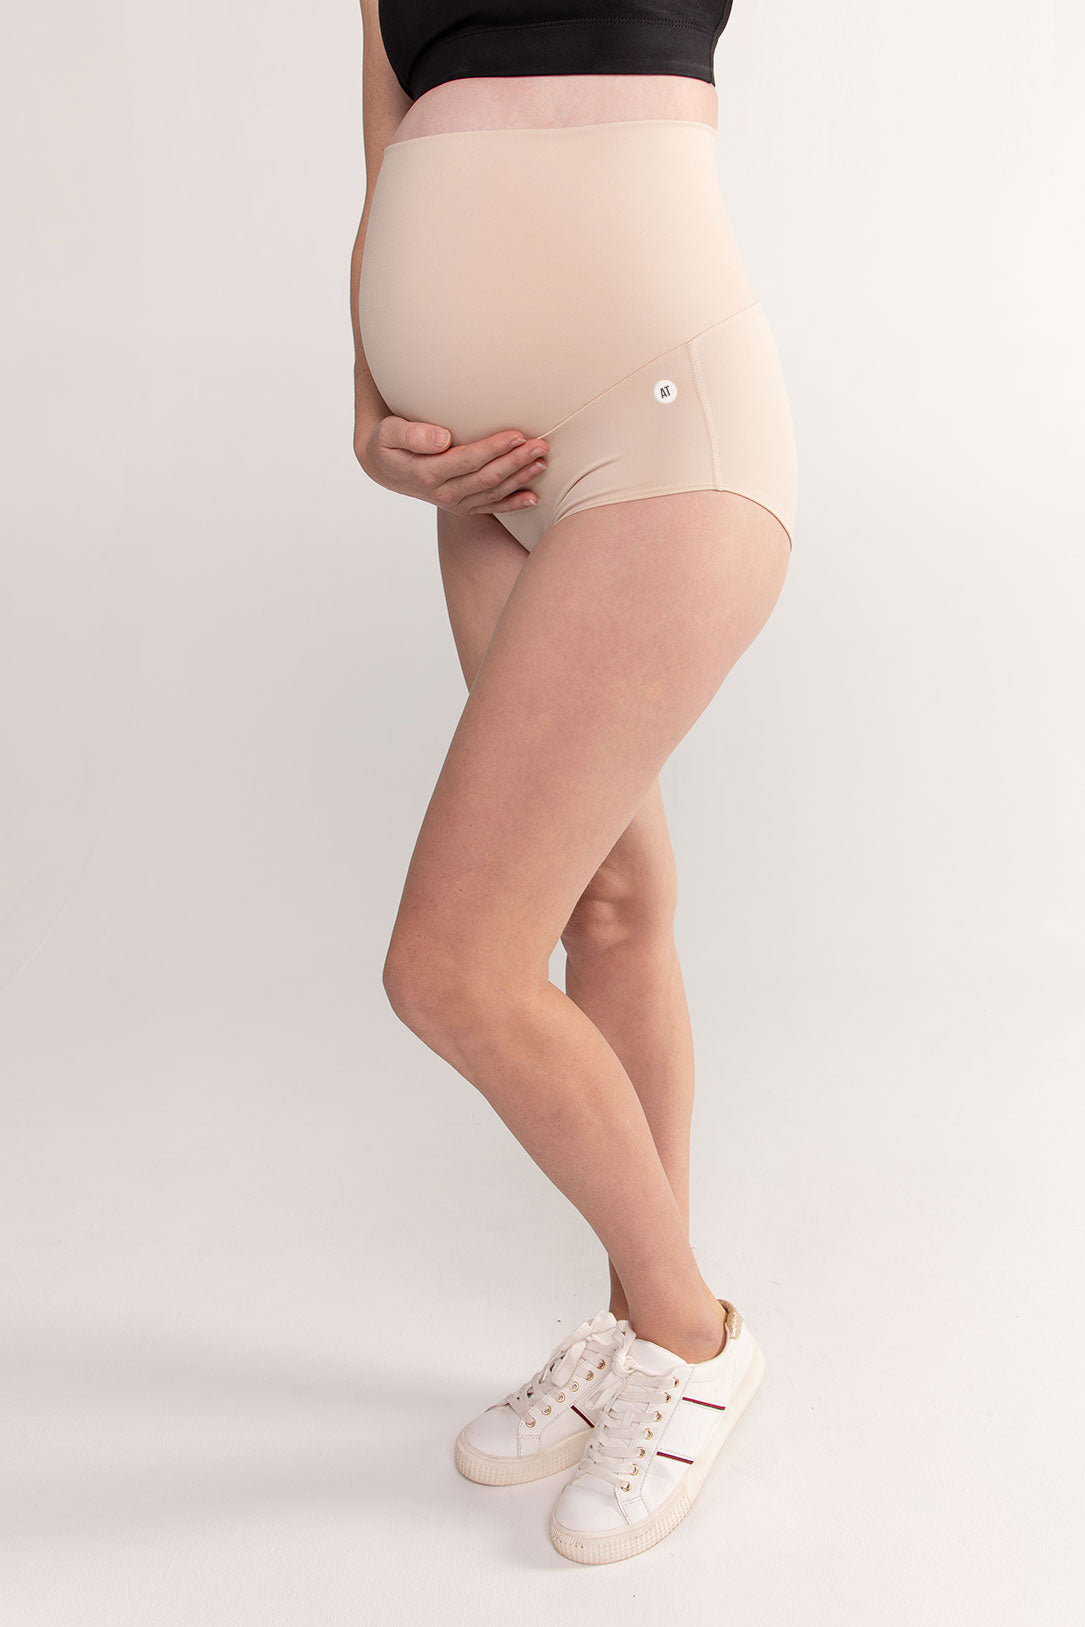 maternity-brief-underwear-beige-small-side2